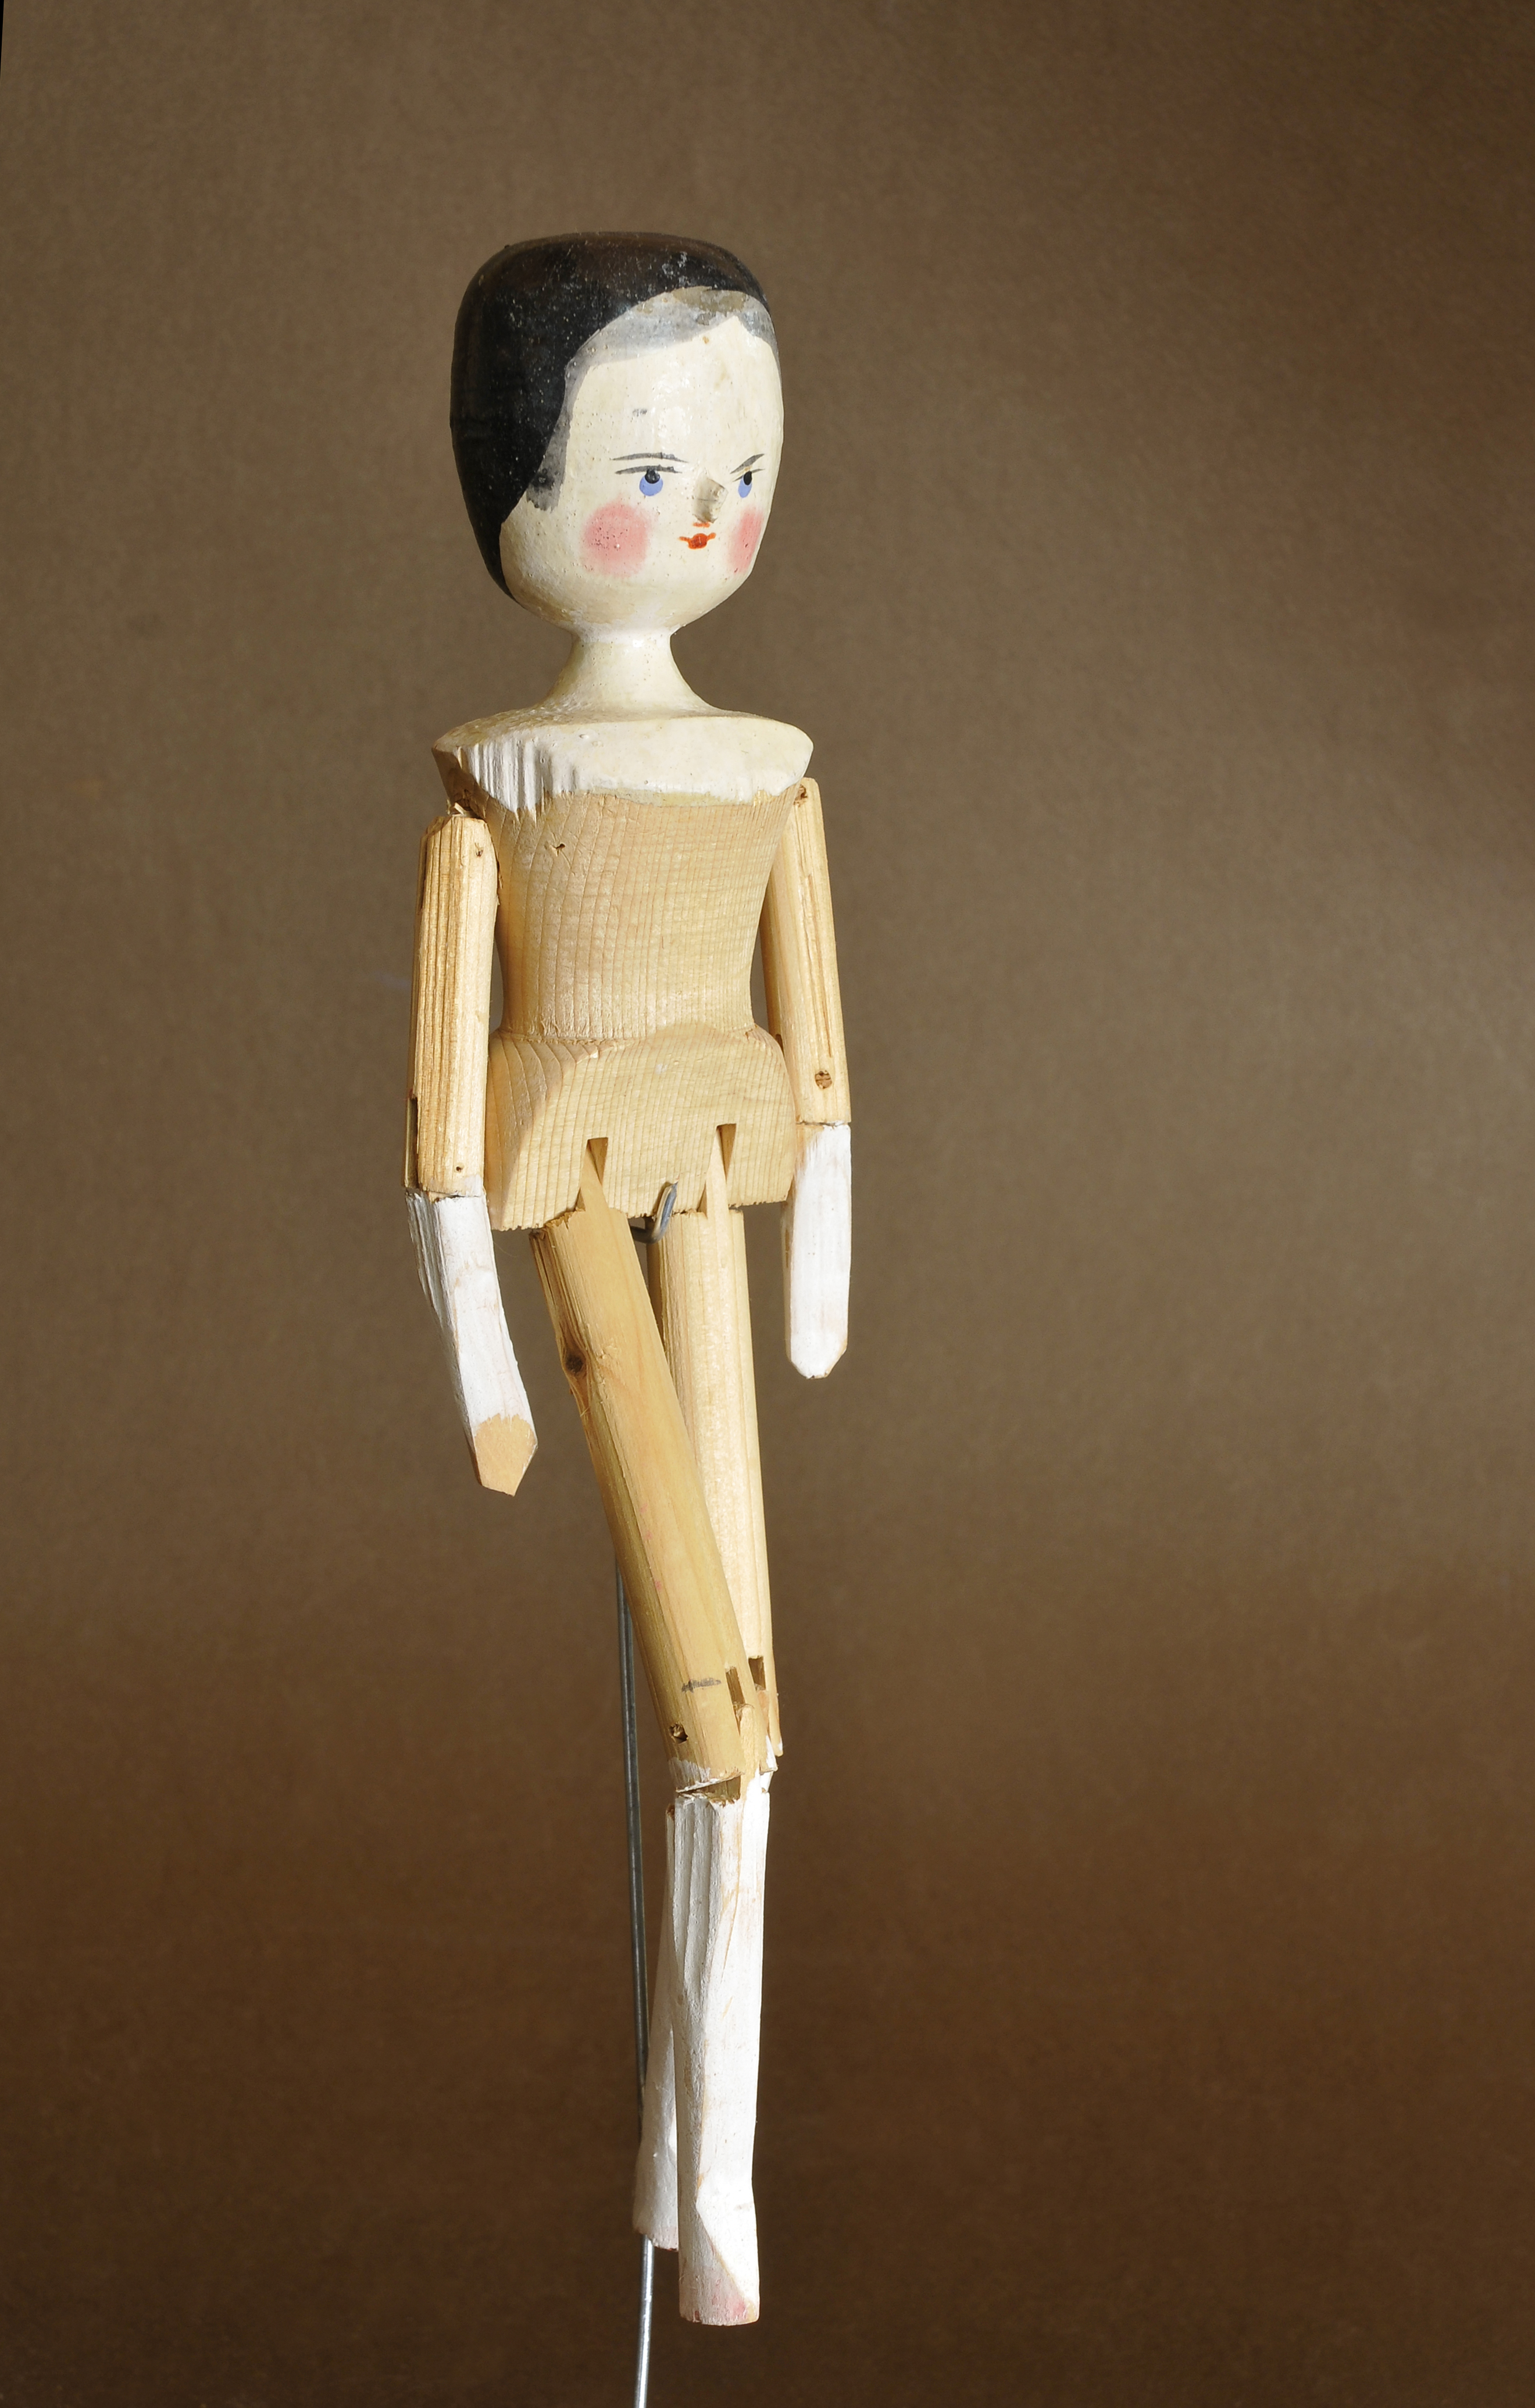 creepy wooden doll